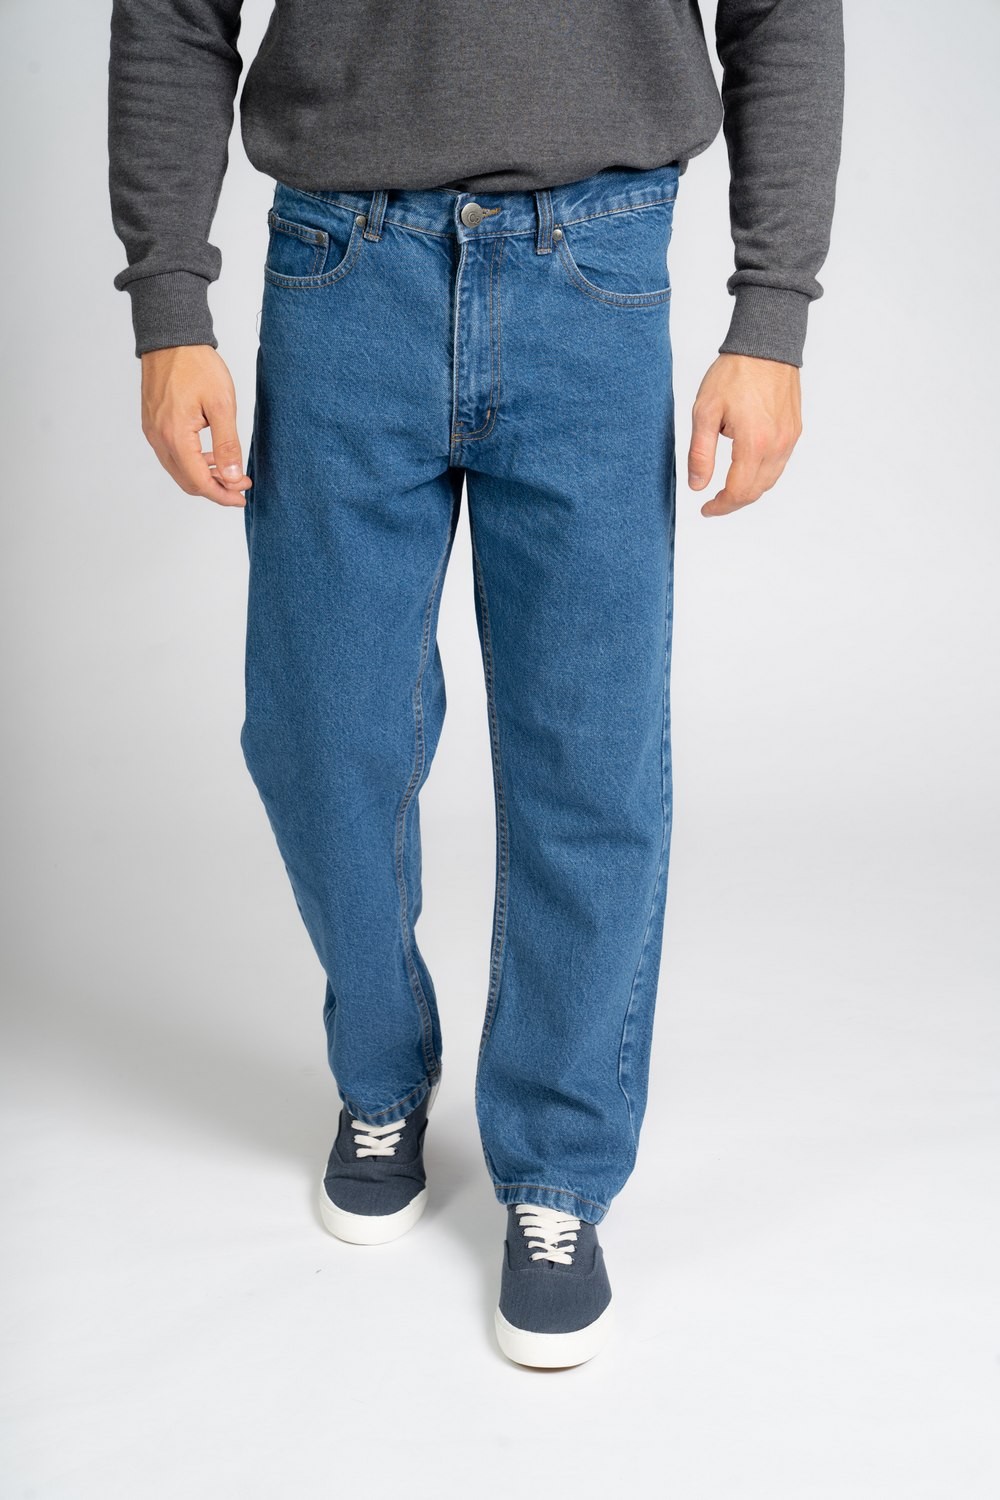 Carabou Jeans ACJ waist size 42R